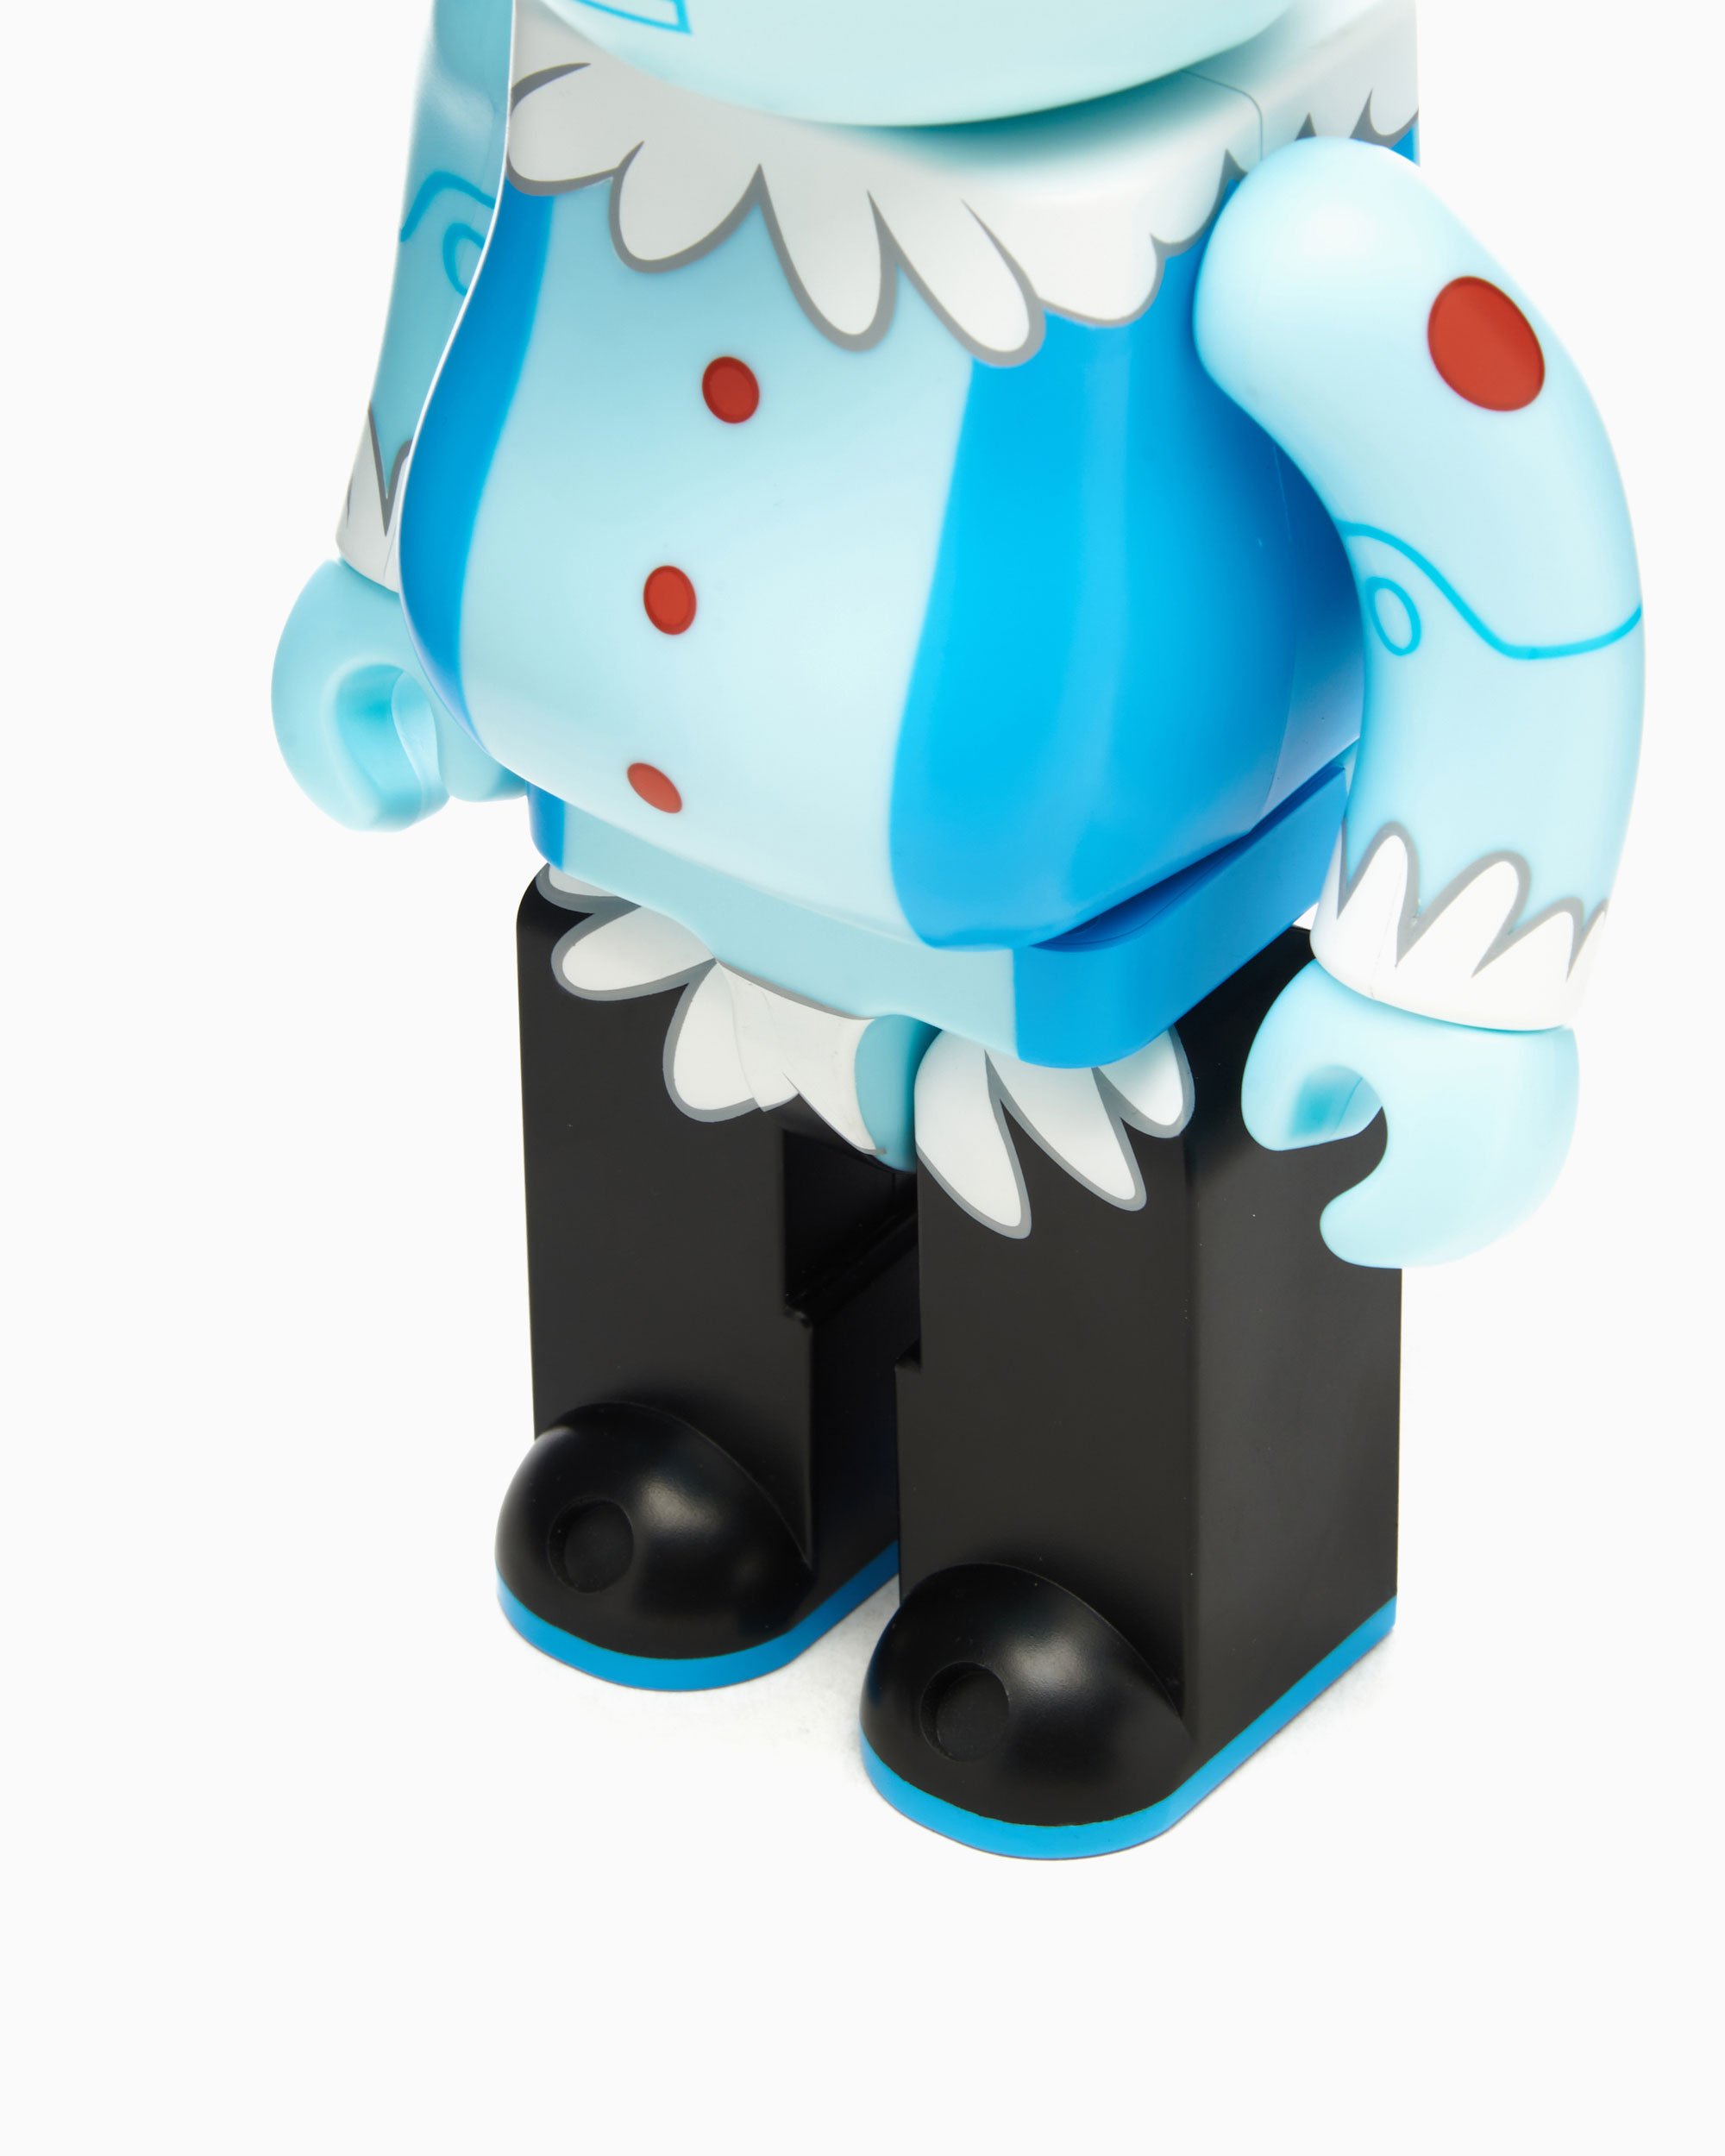 Medicom Toy Be@rbrick Rosie The Robot 100%+400% Blue S2314ROSIE ...